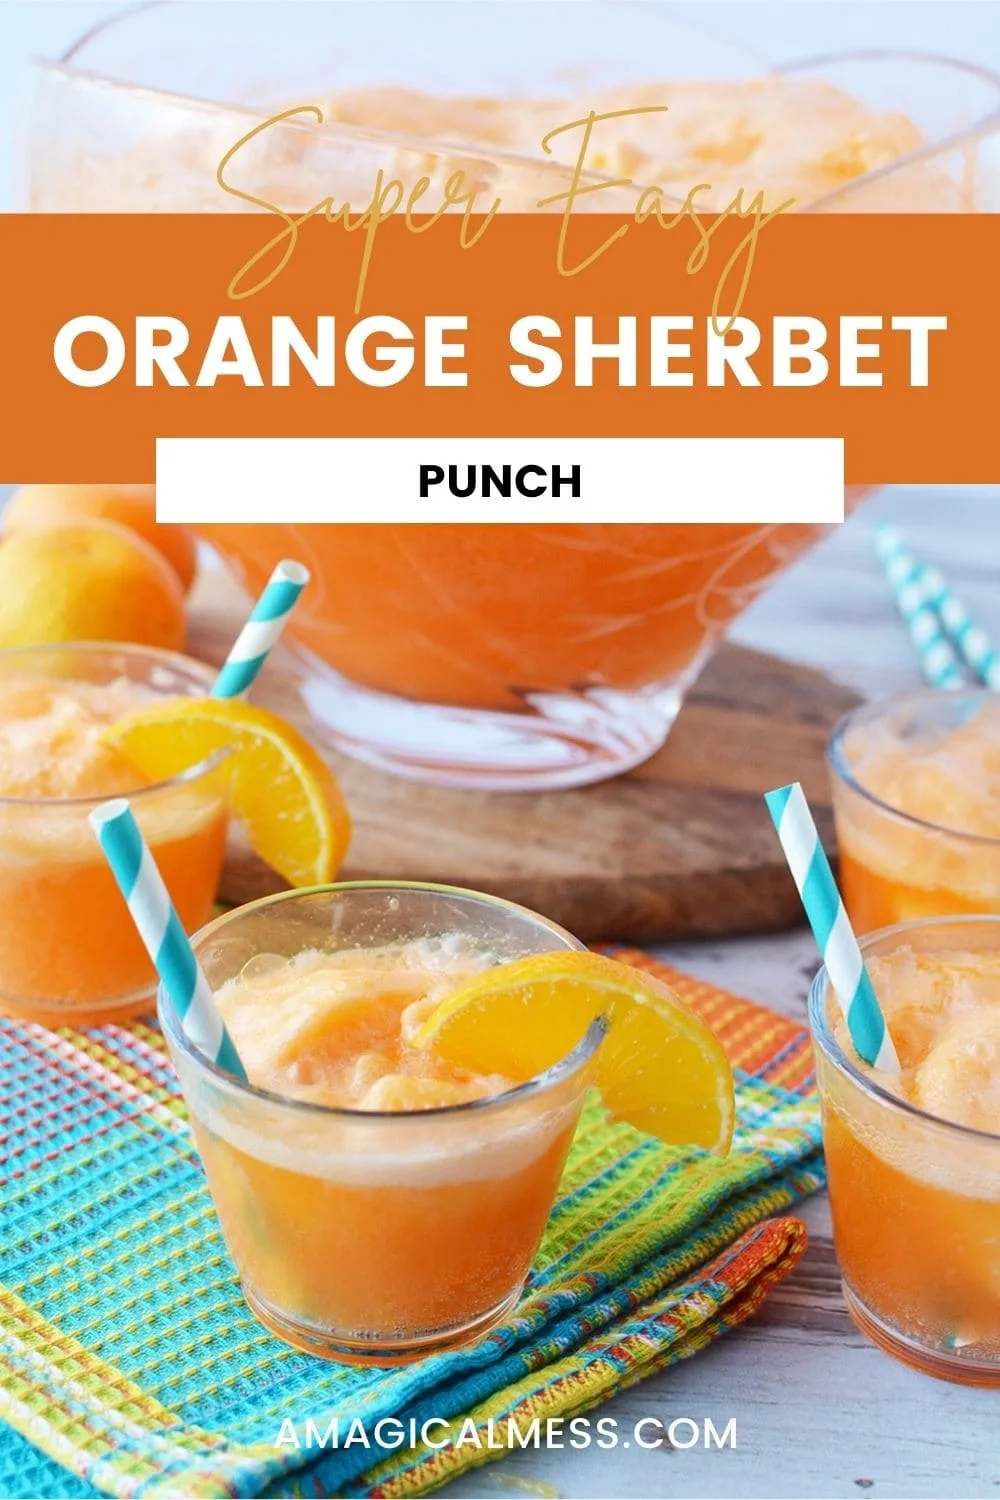 Glasses of orange sherbet punch in front of punch bowl.